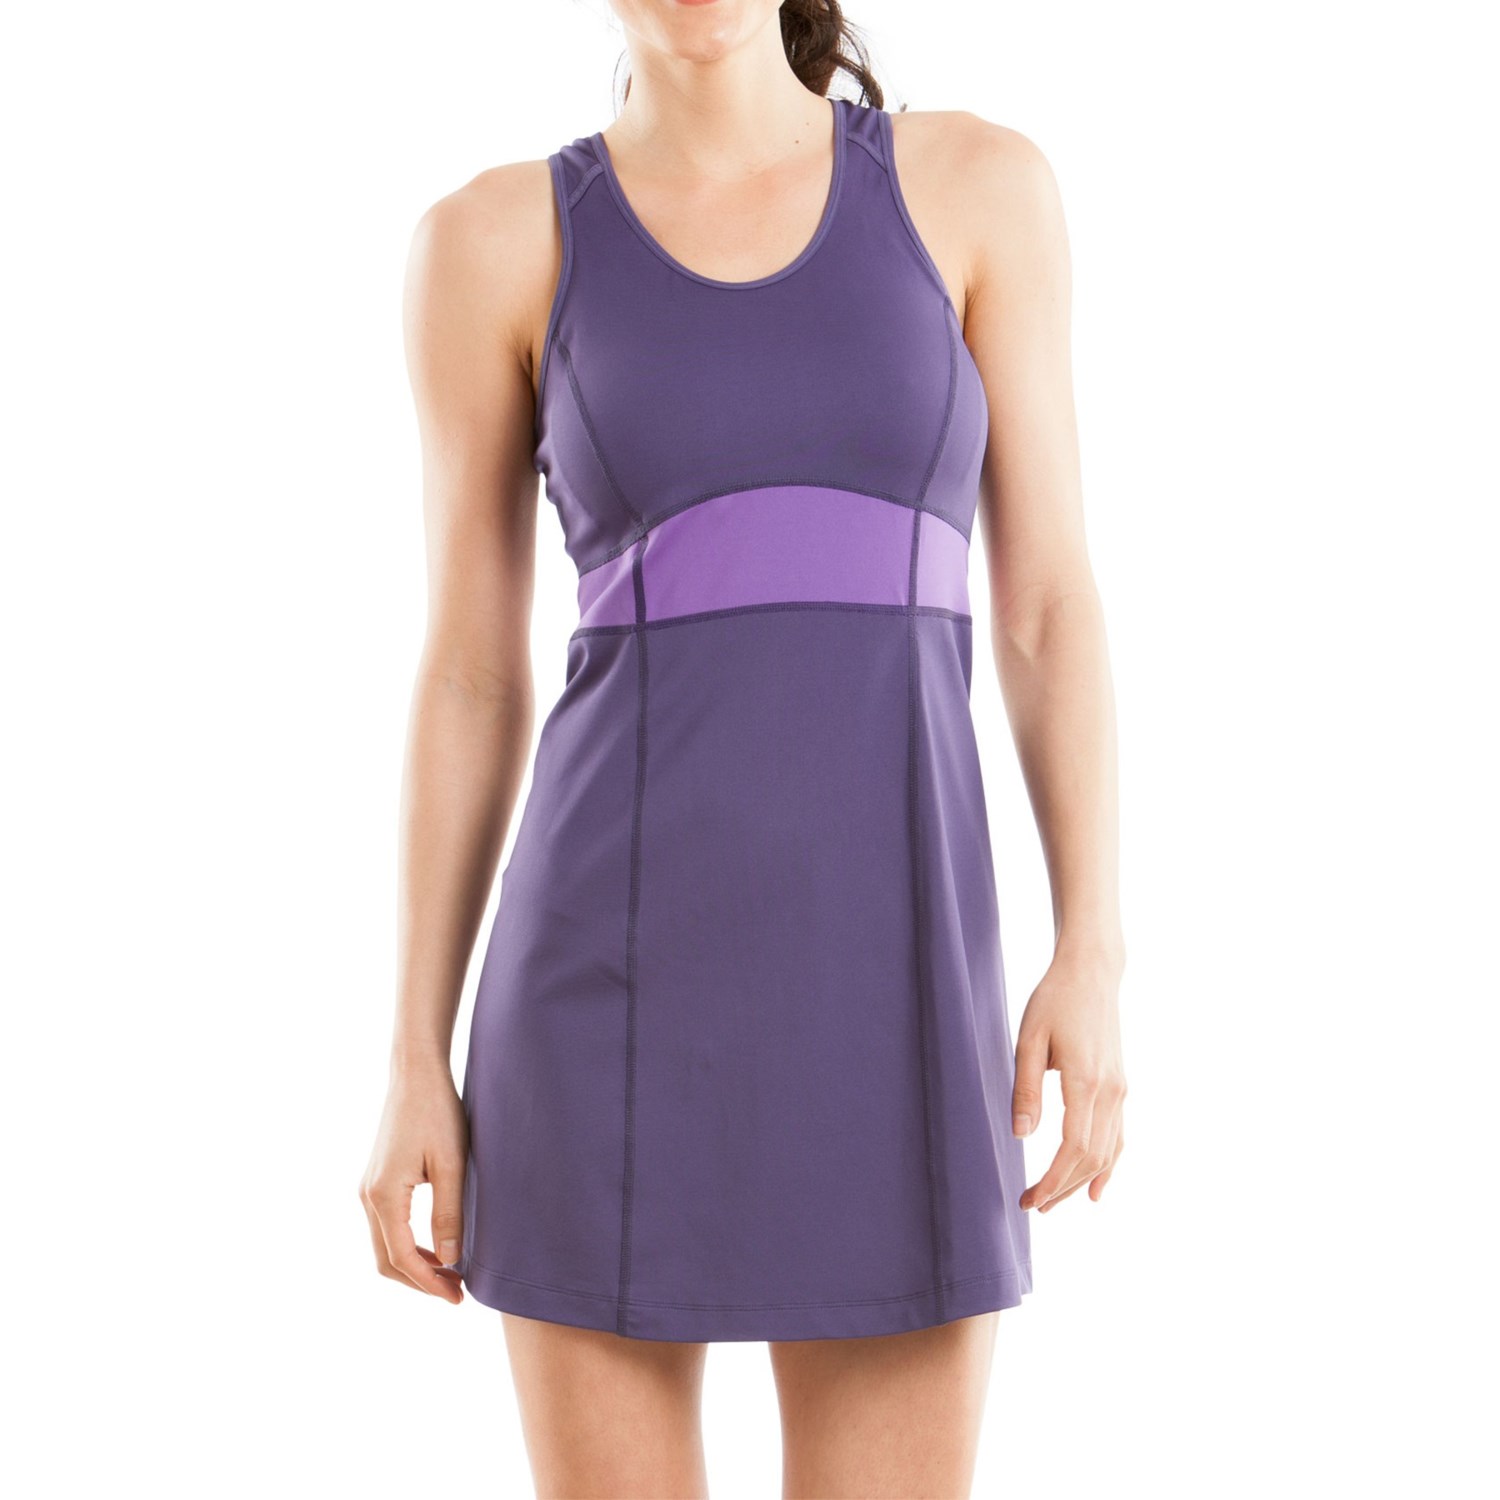 Moving Comfort Endurance Dress - Sleeveless (For Women) - Save 29%